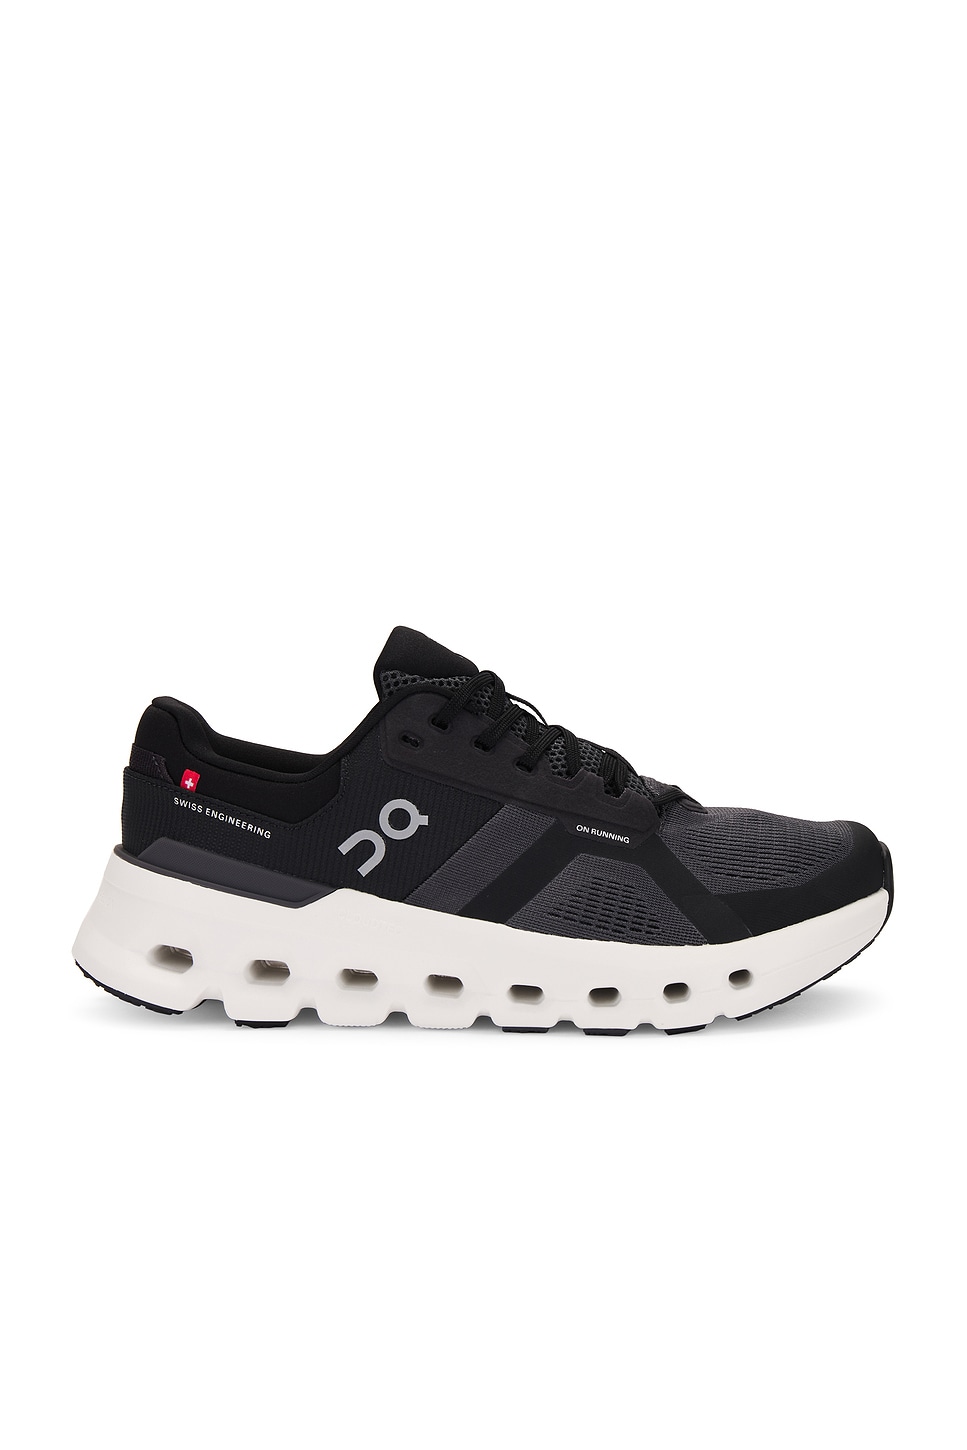 Cloudrunner 2 Sneaker in Black